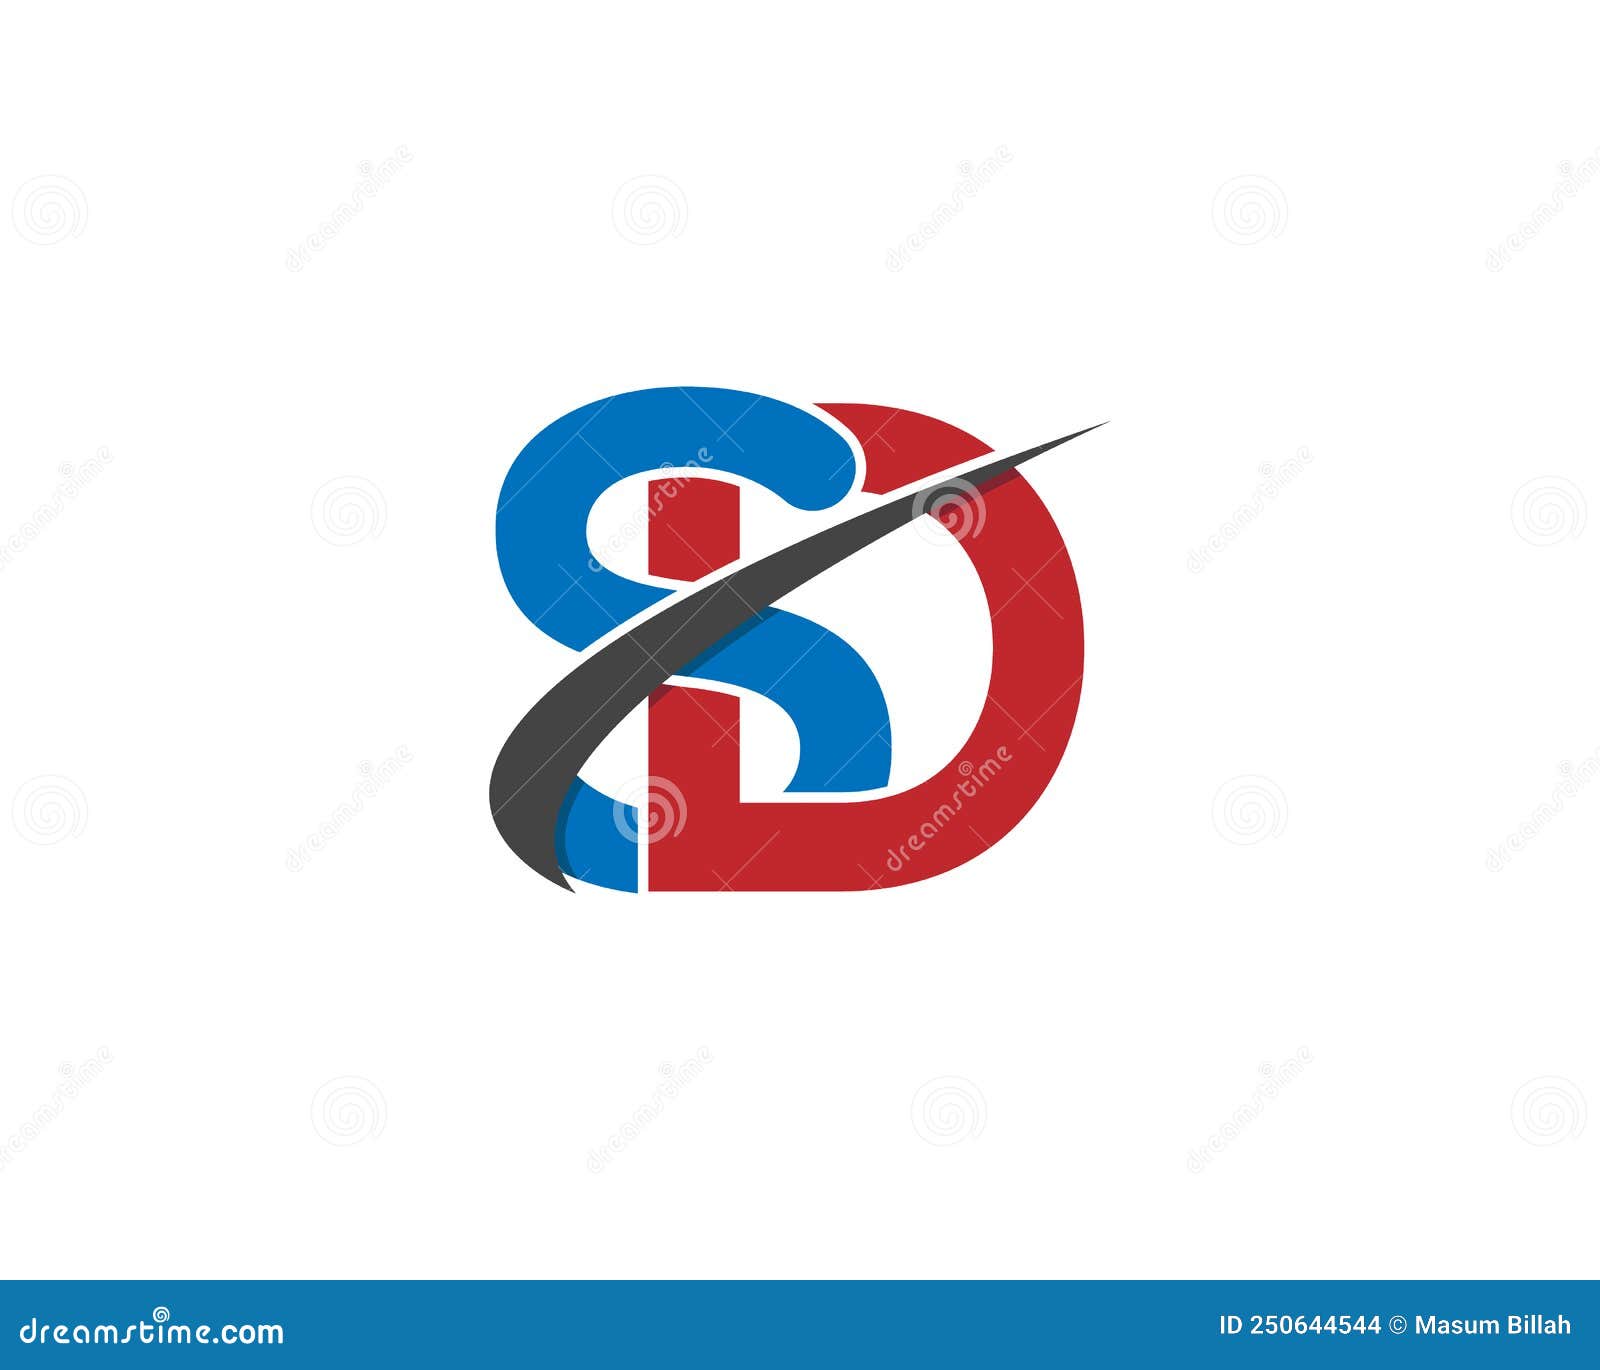 sd letter logo   icon.